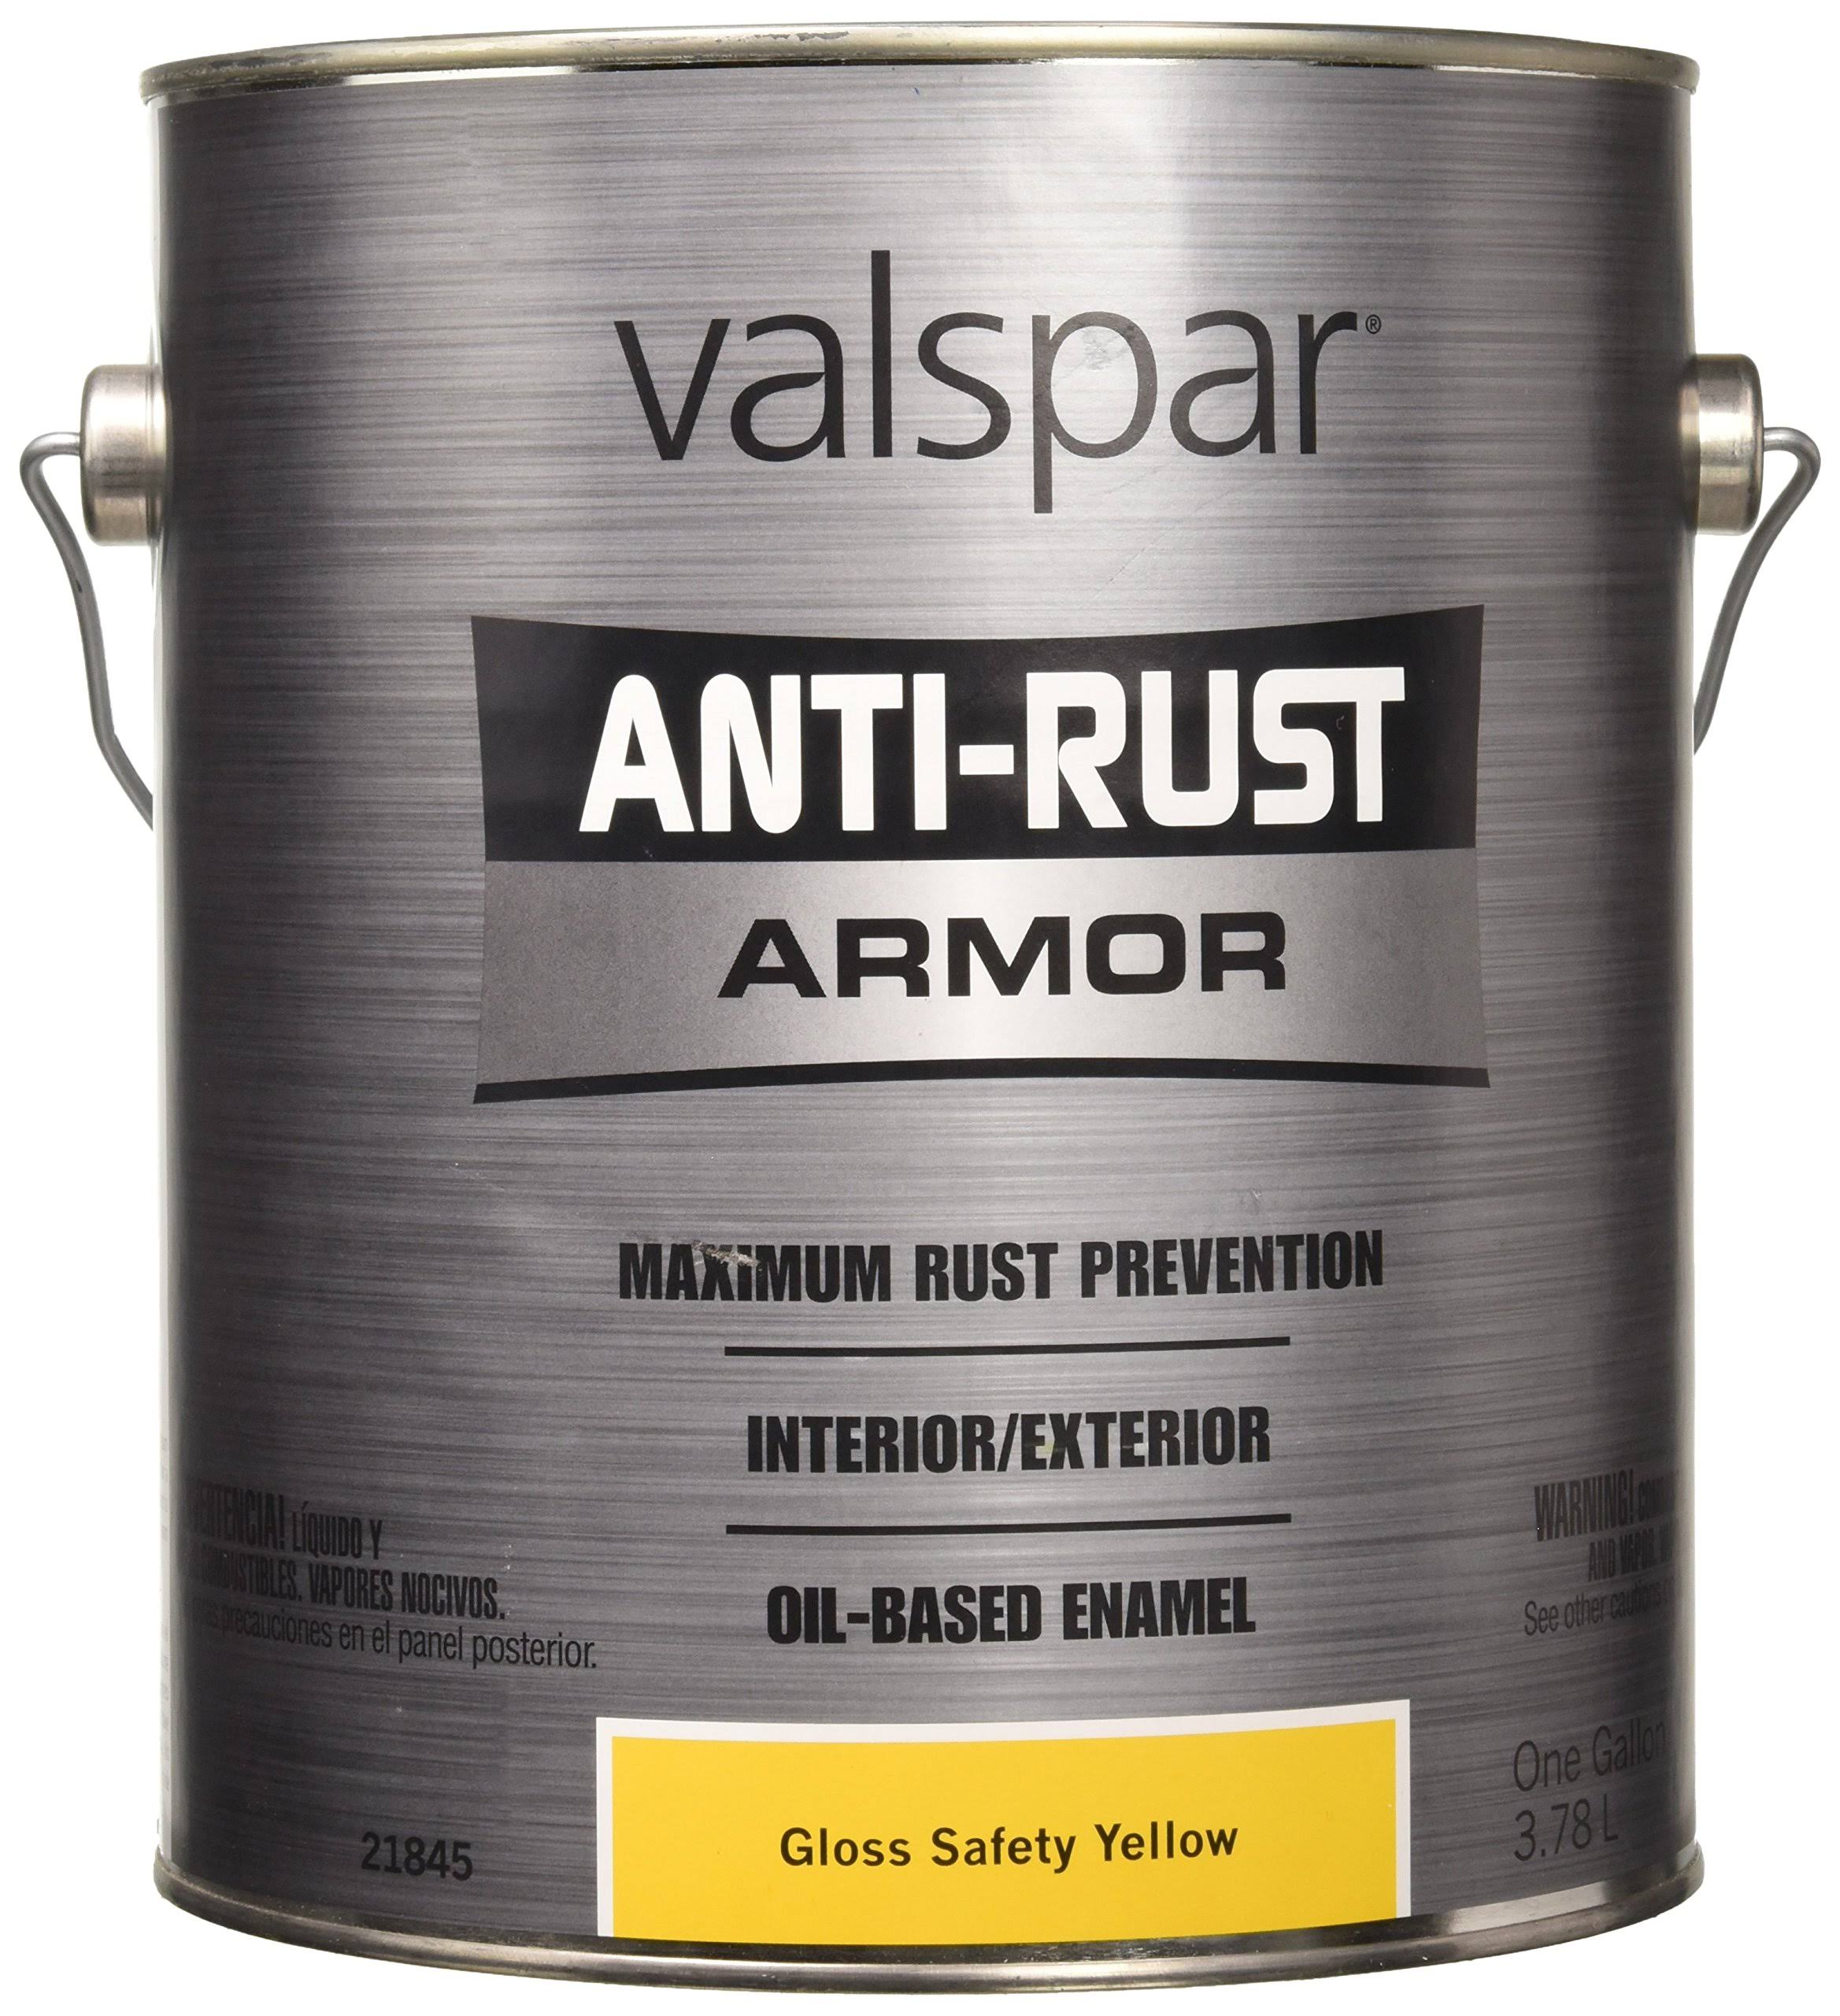 Valspar Anti-Rust Armor Enamel Paint - Safety Yellow, 1gal